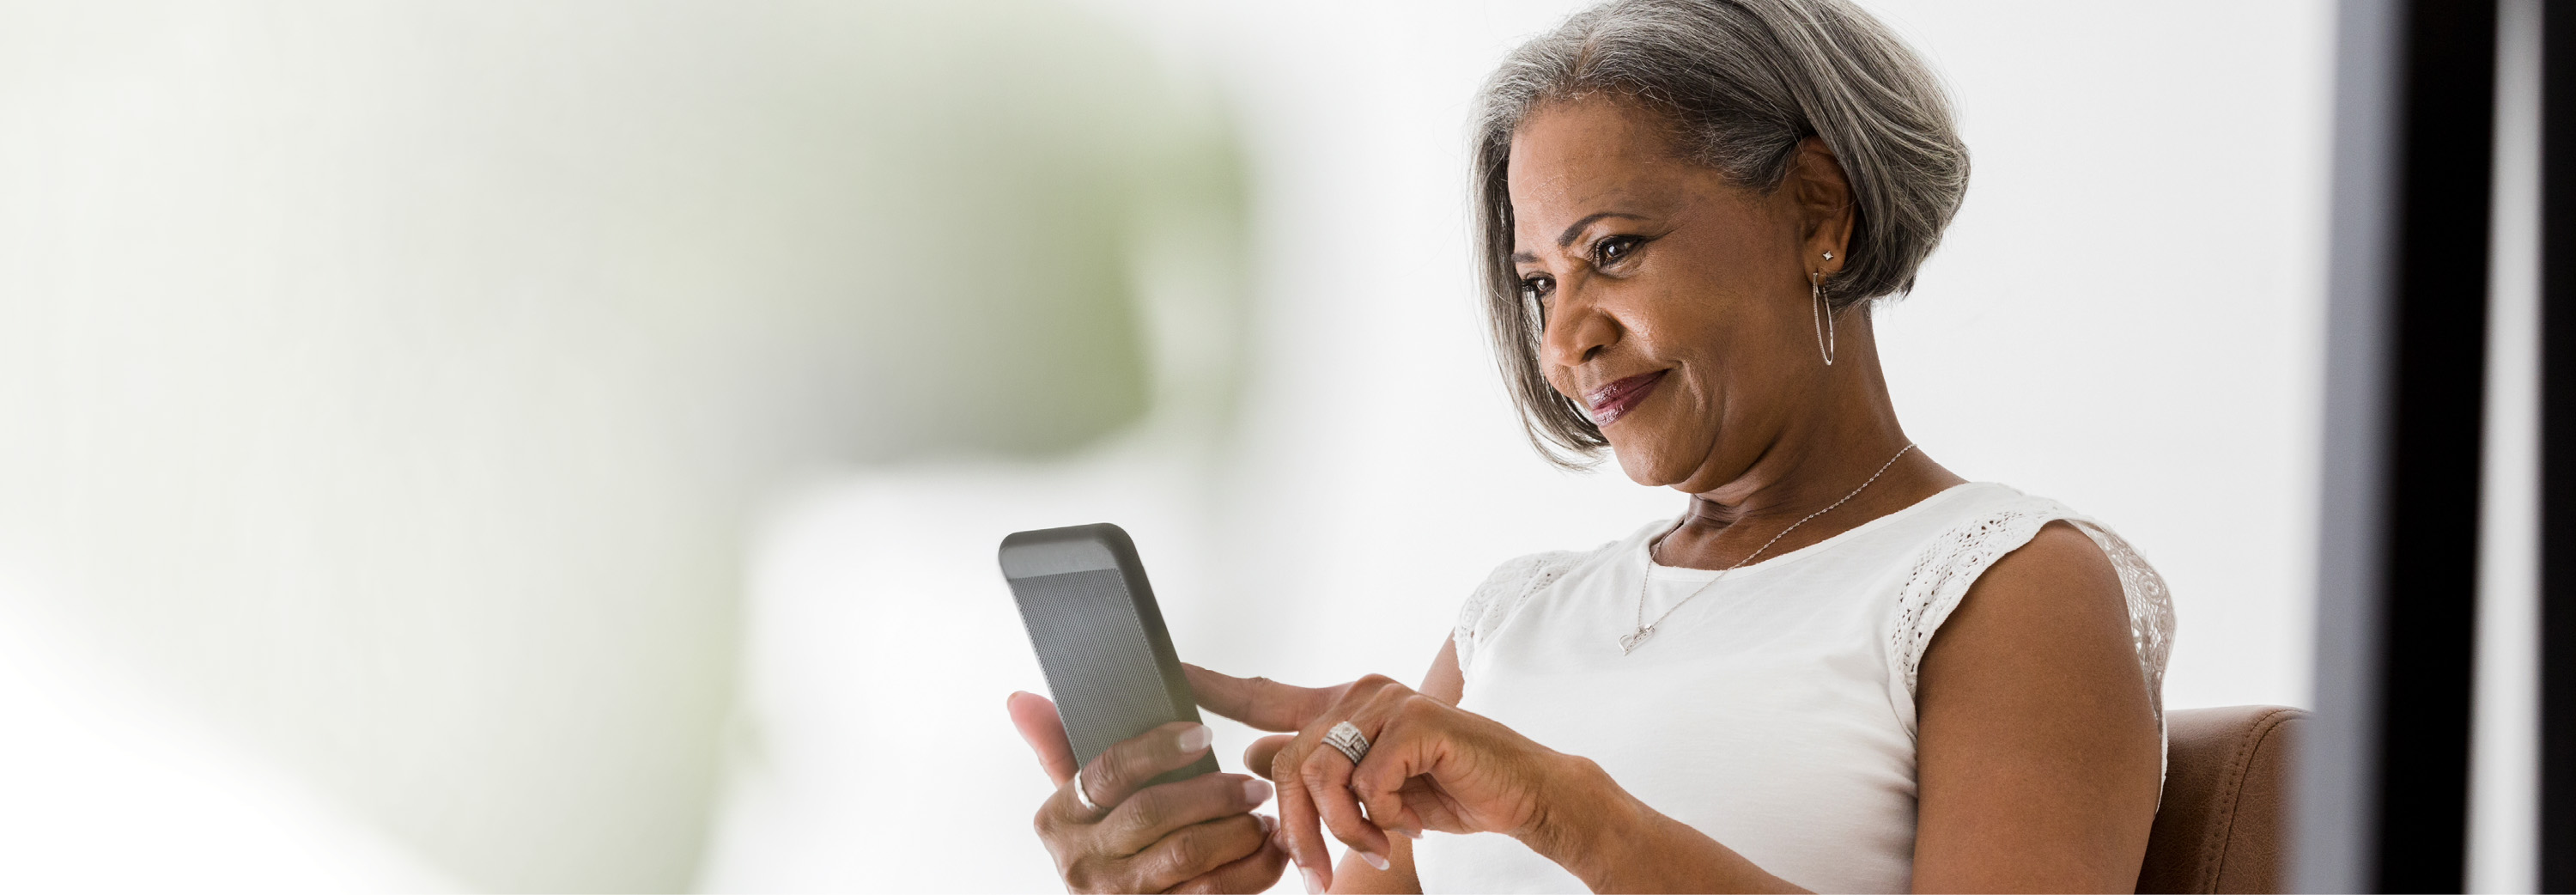 elderly woman with smartphone